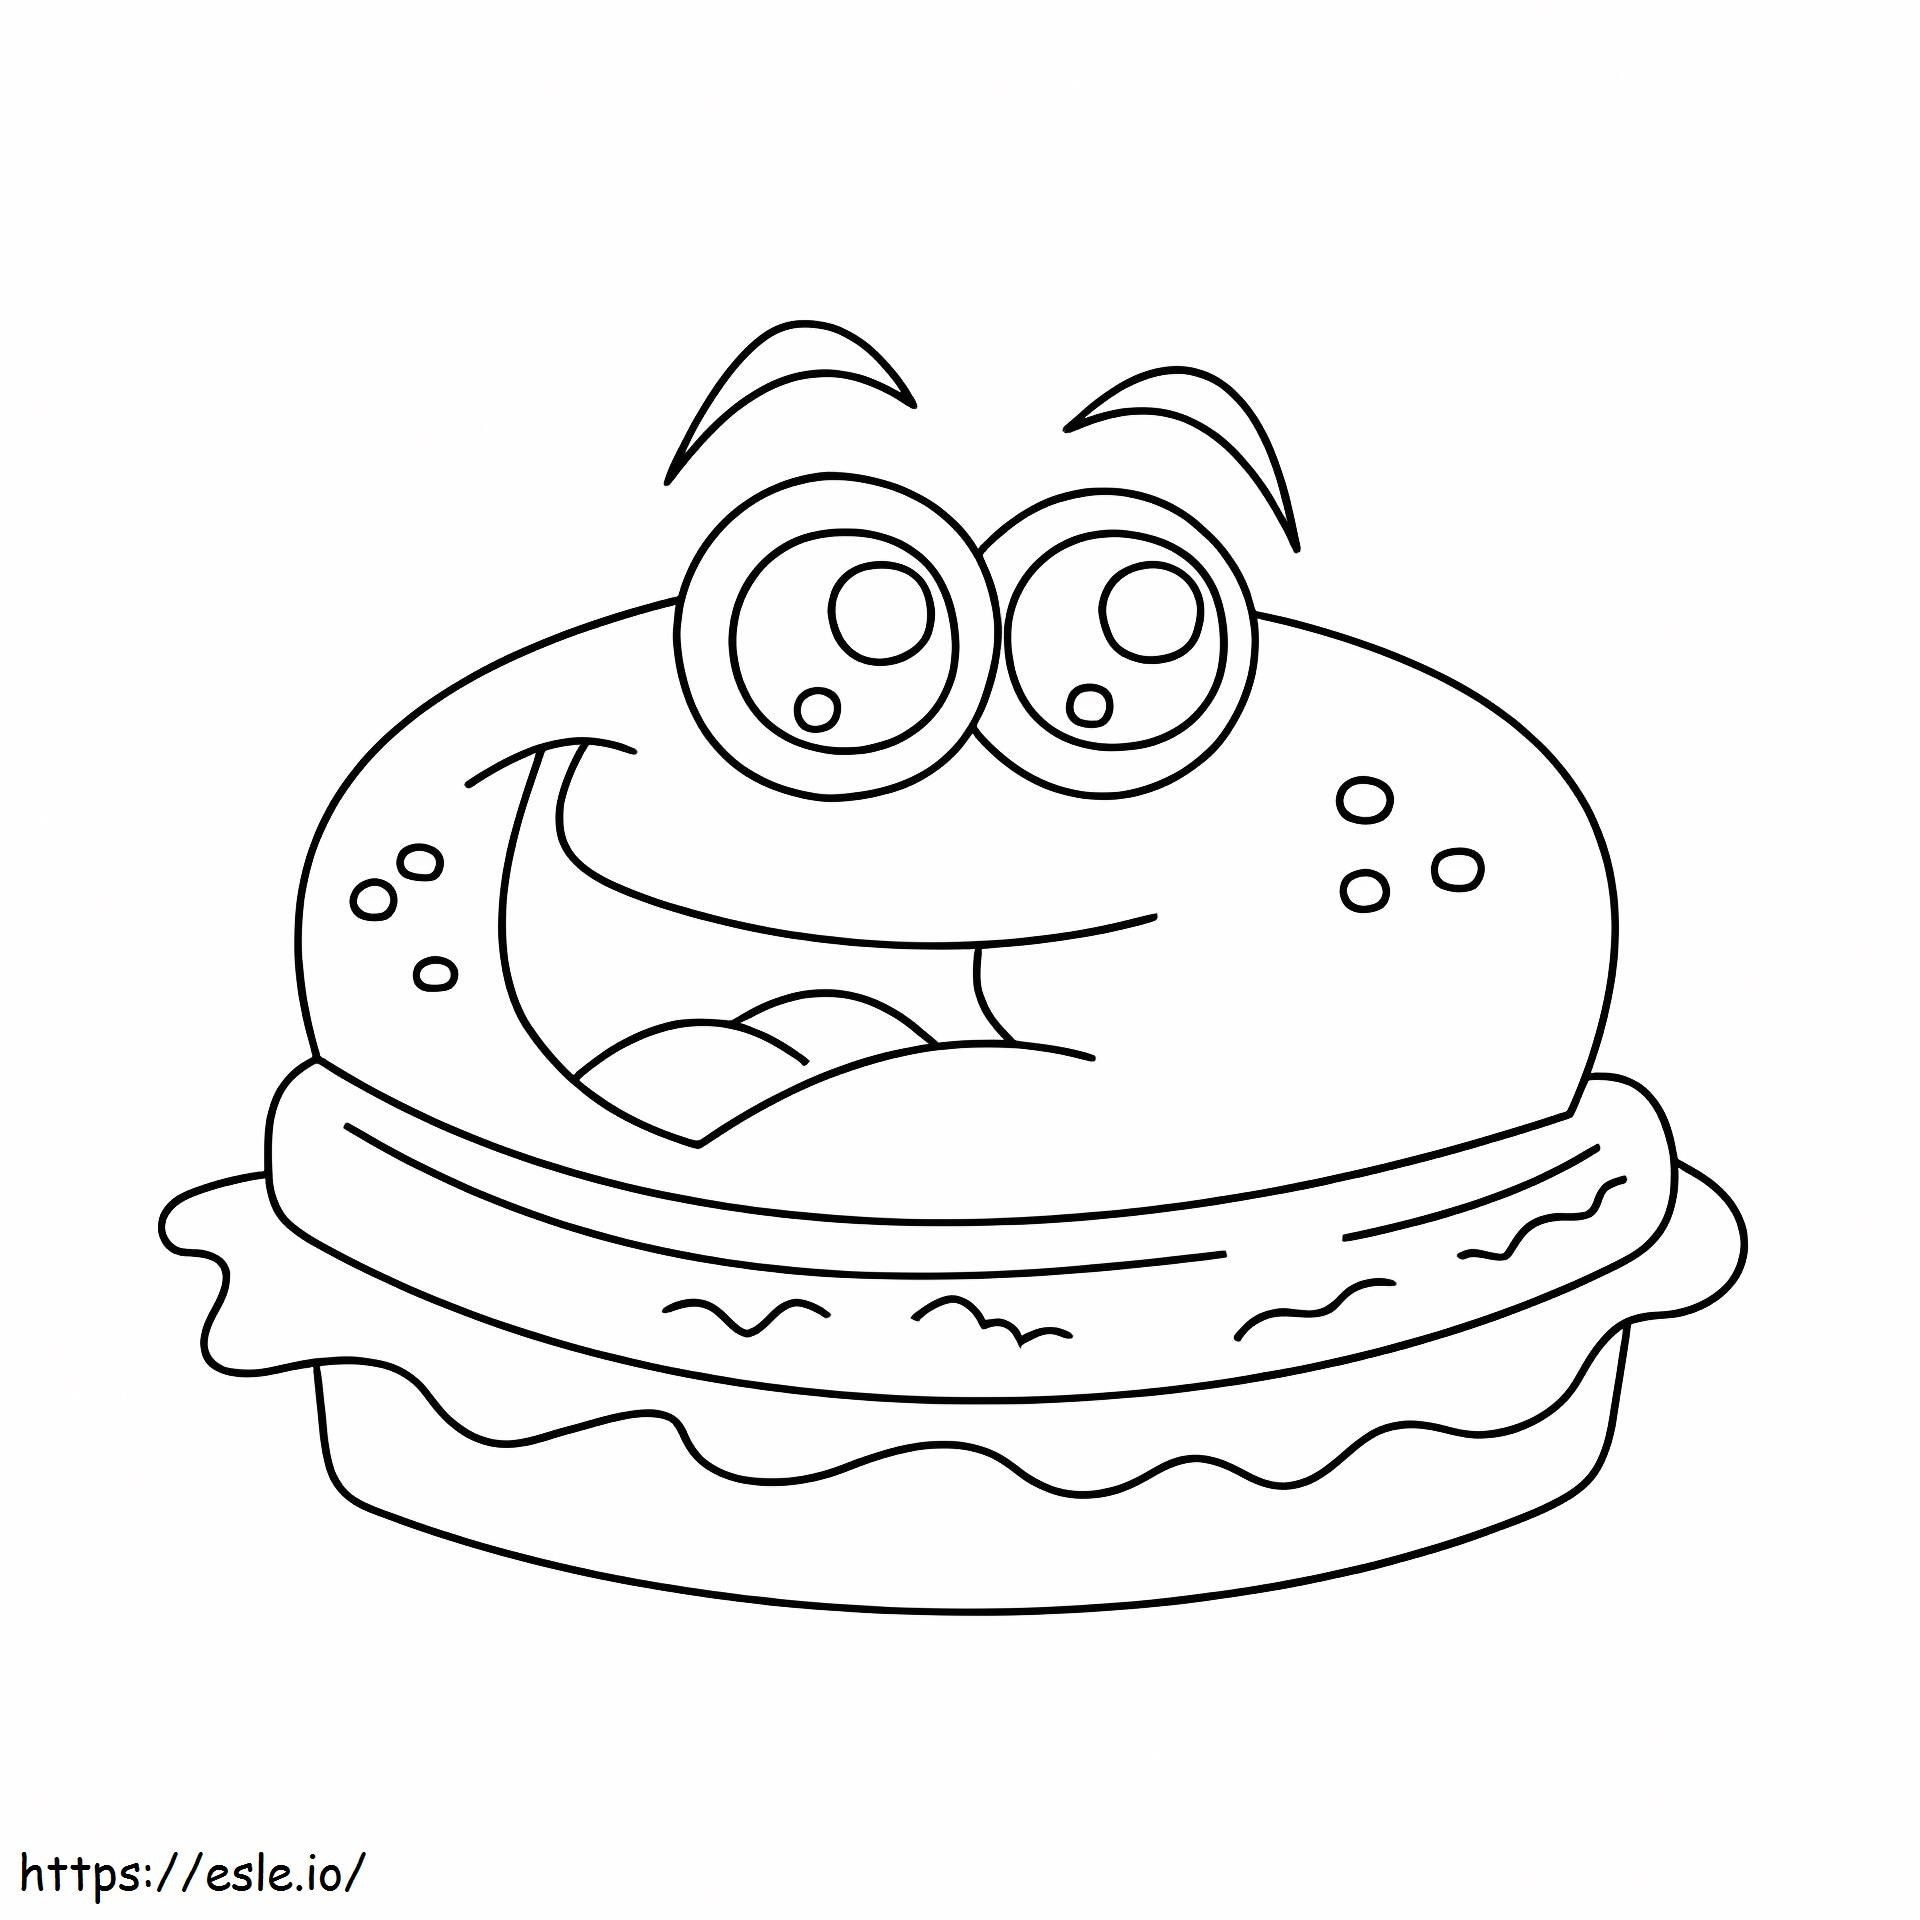 Hambúrguer de desenho animado para colorir